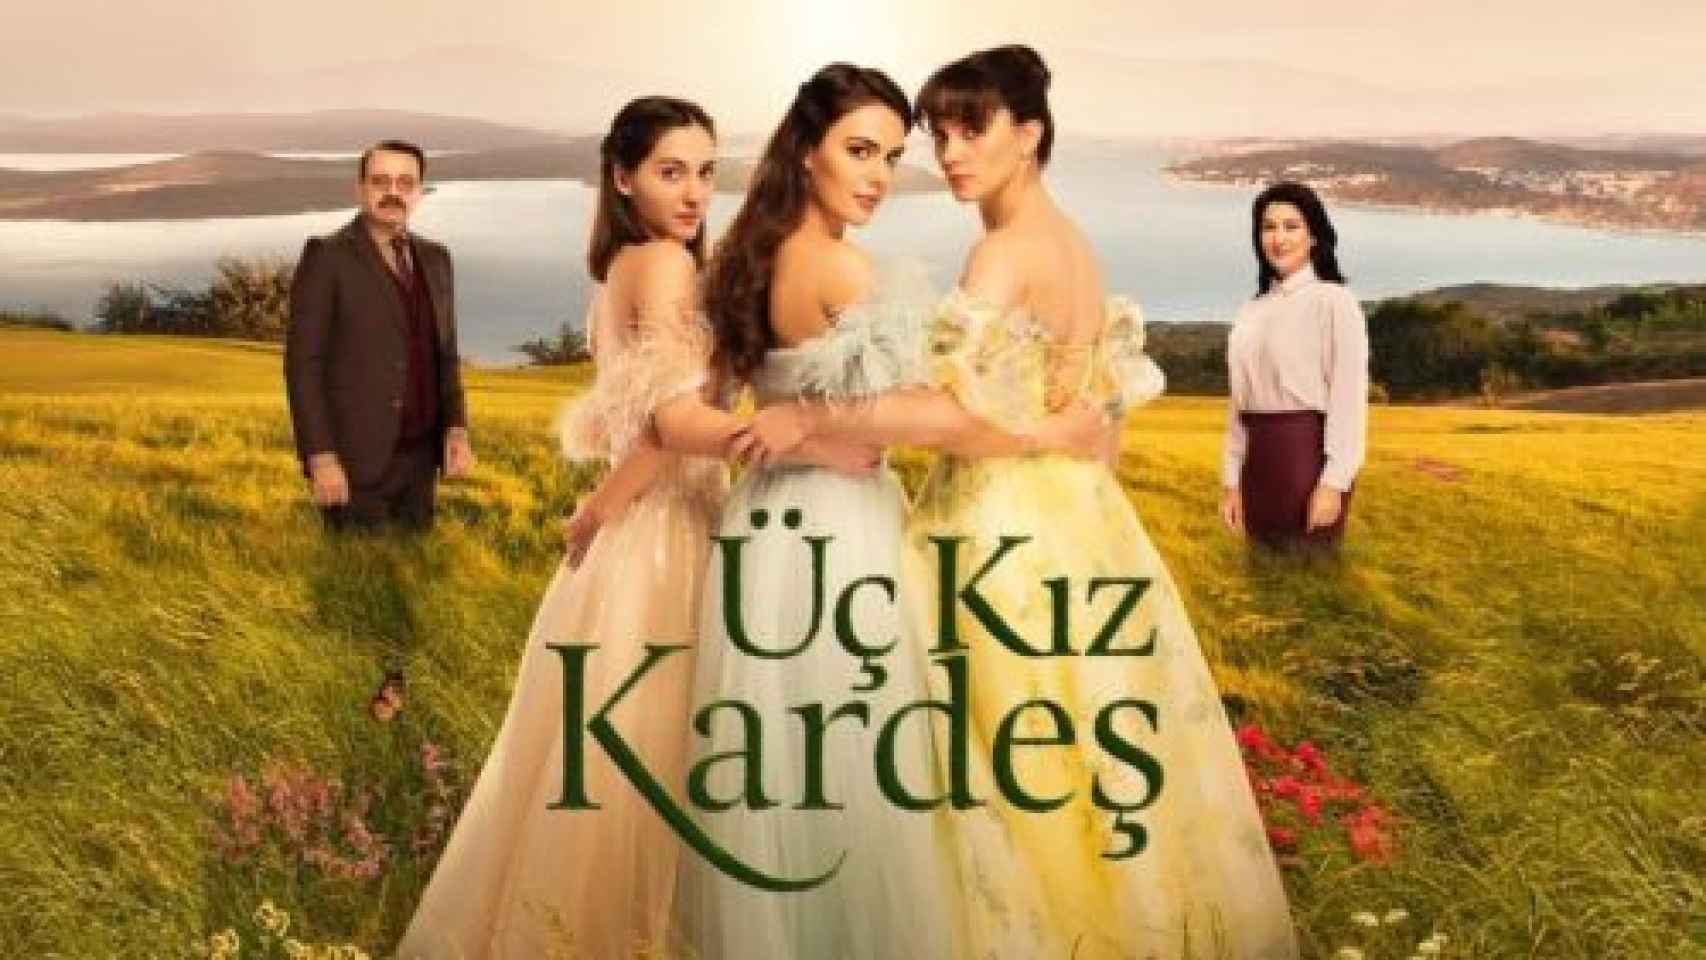 Uç Kiz Kardes, una de las series del momento